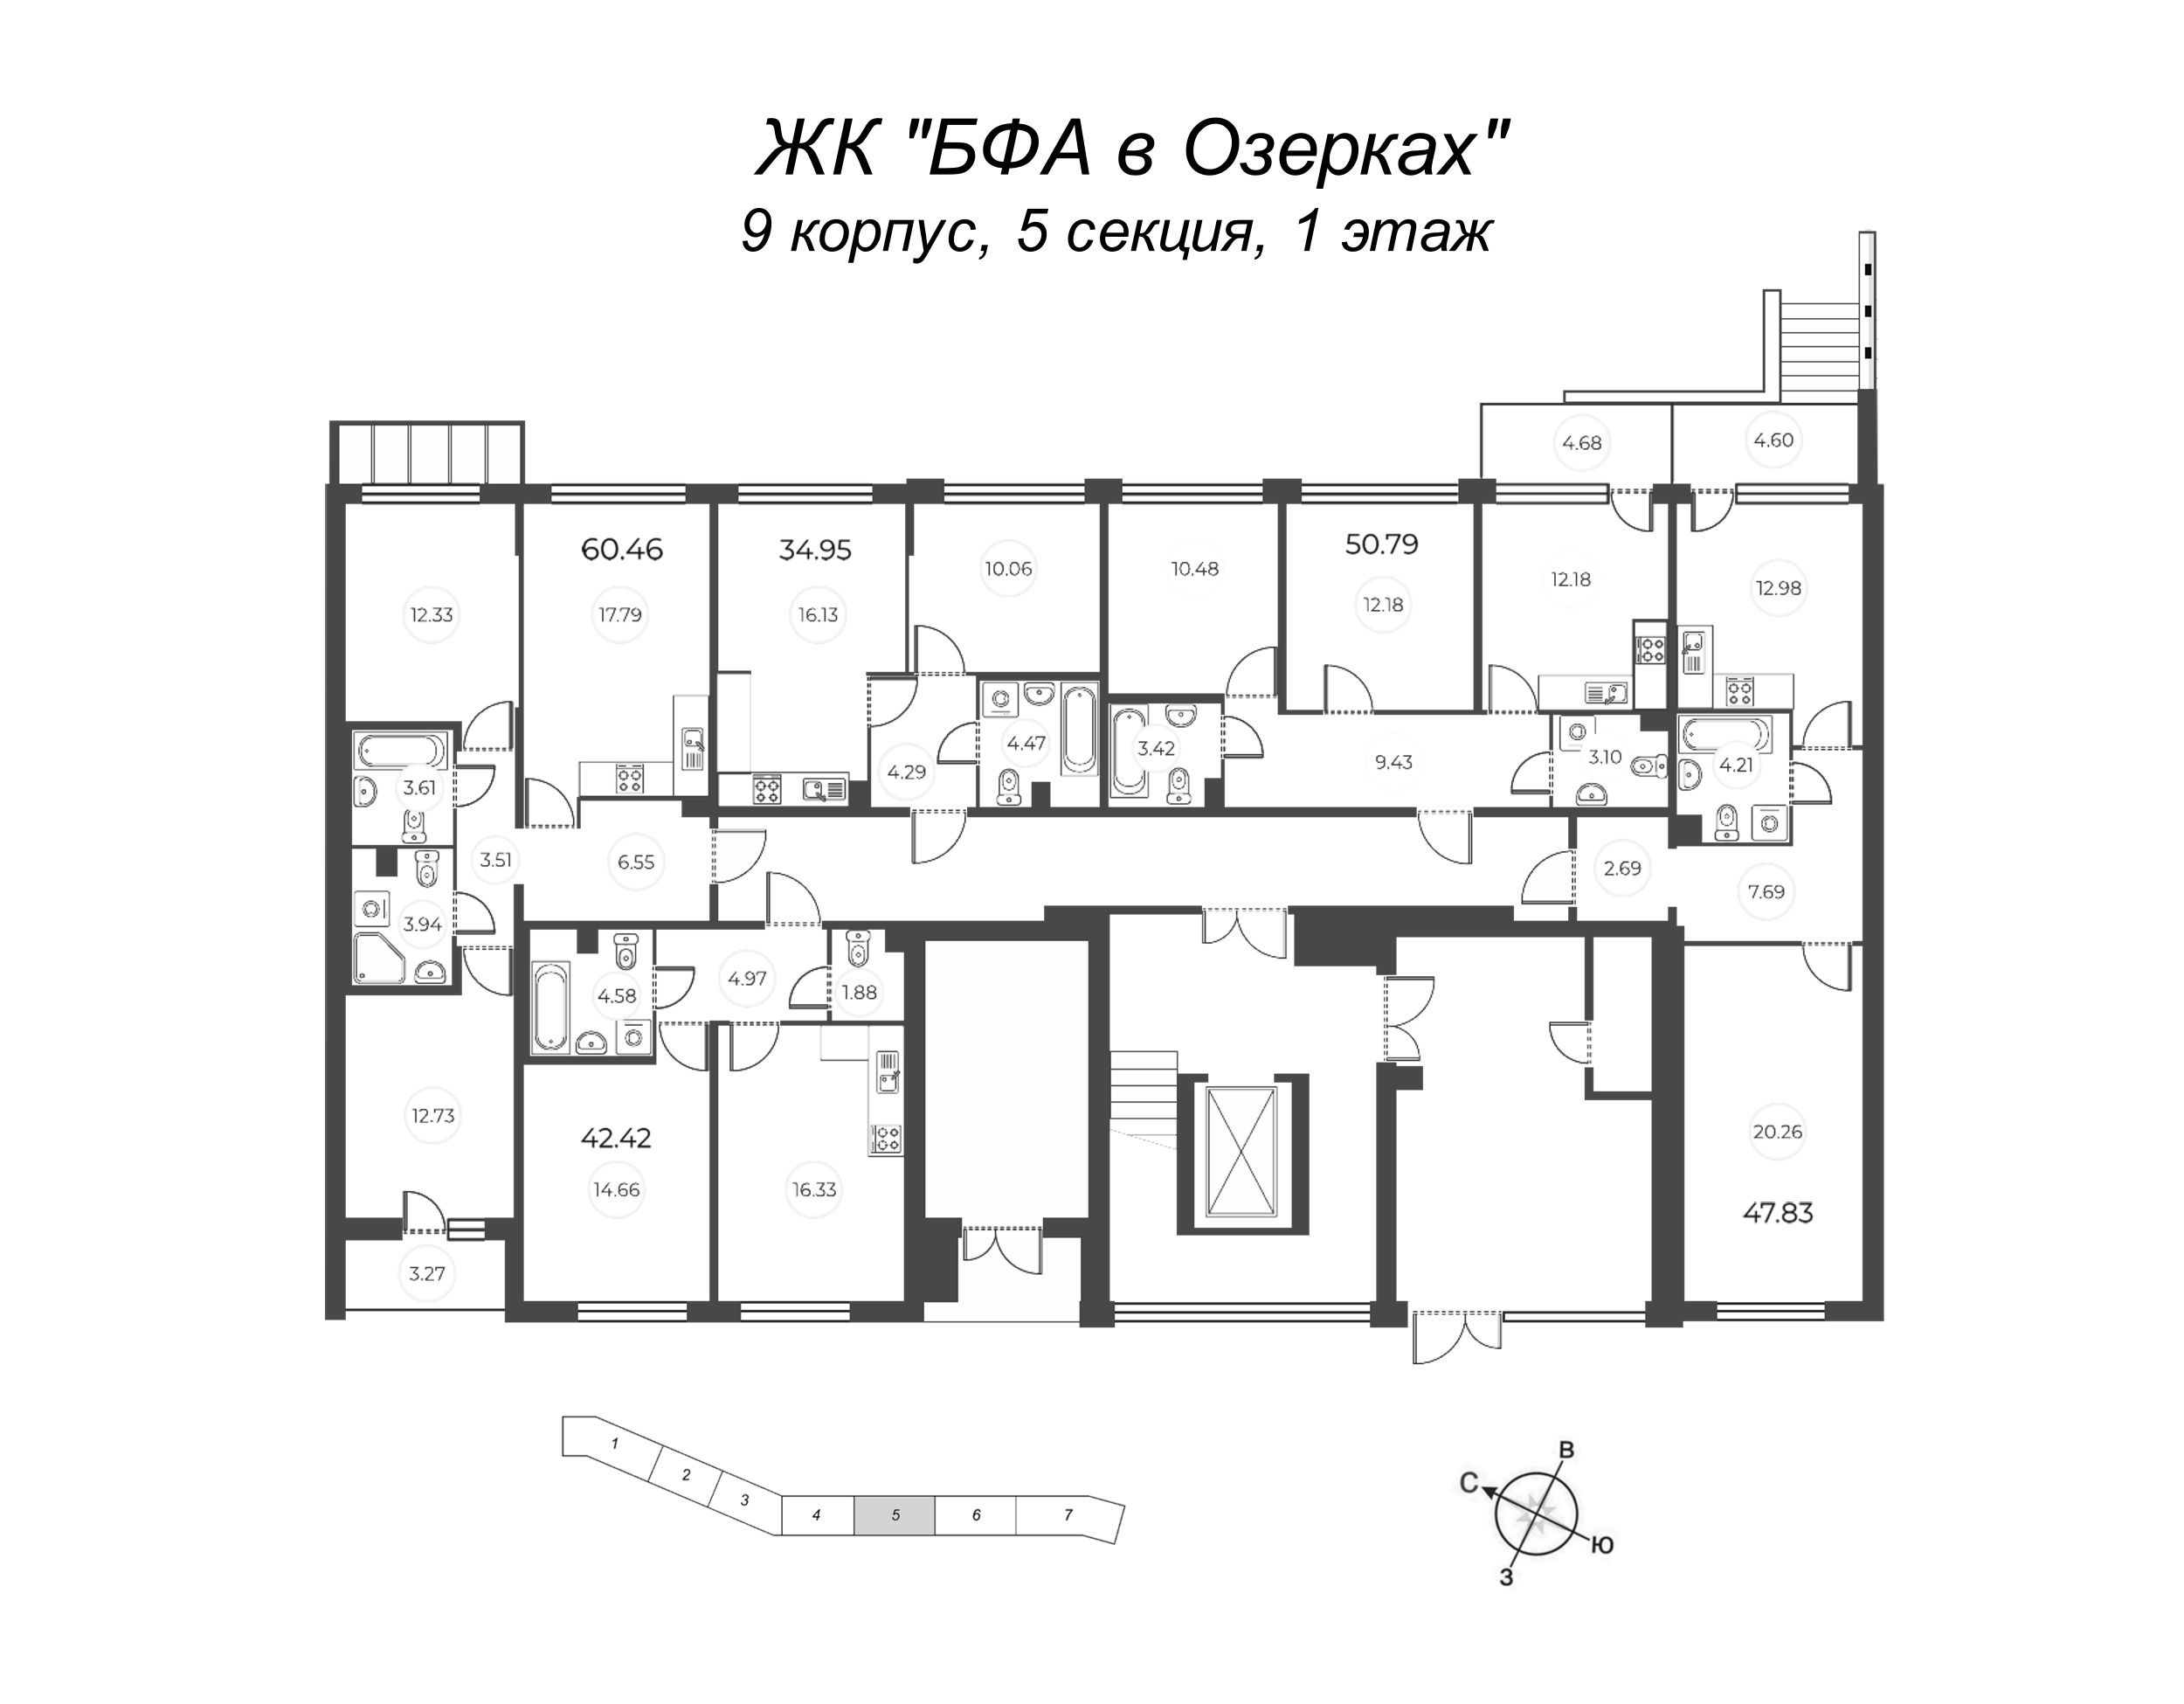 2-комнатная (Евро) квартира, 42.42 м² - планировка этажа